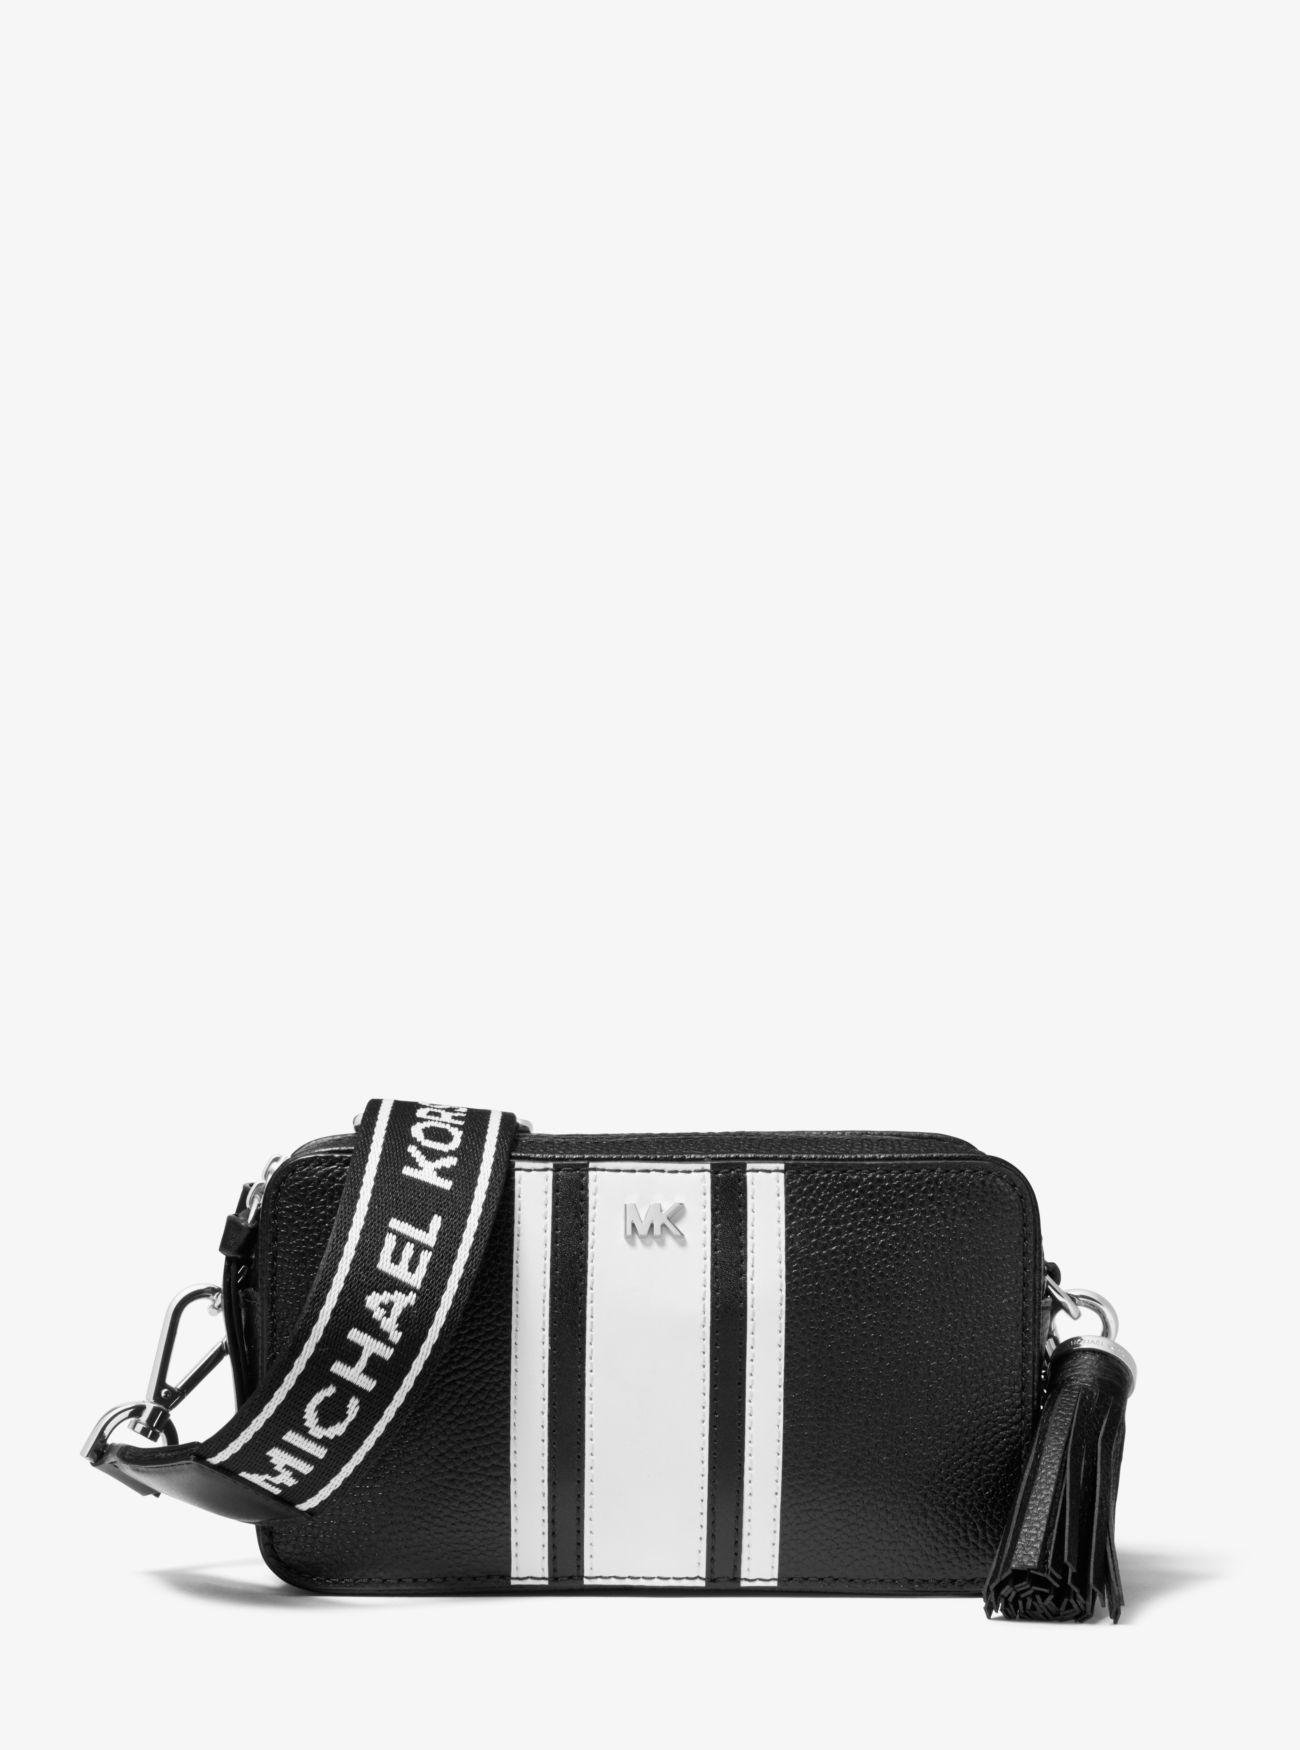 MK black and white bag